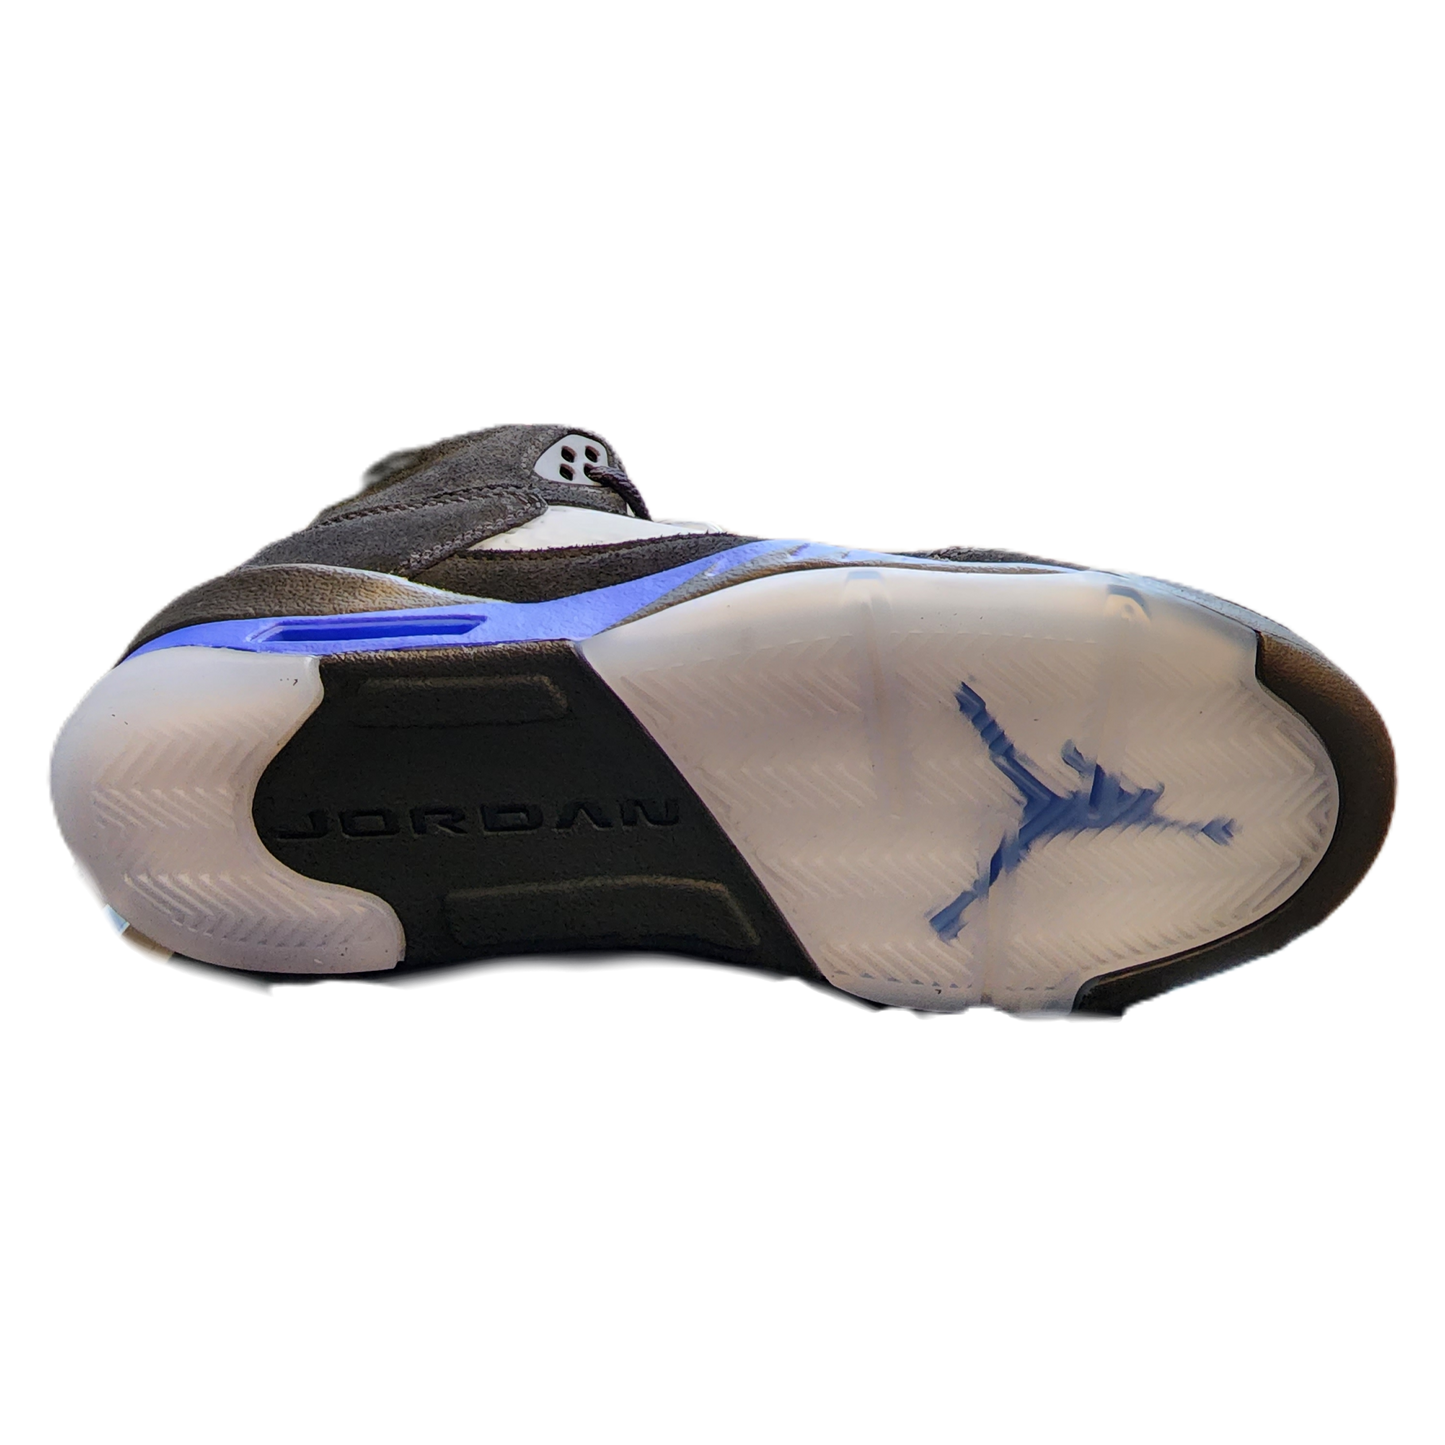 Jordan 5 Retro Racer Blue Size 5.5